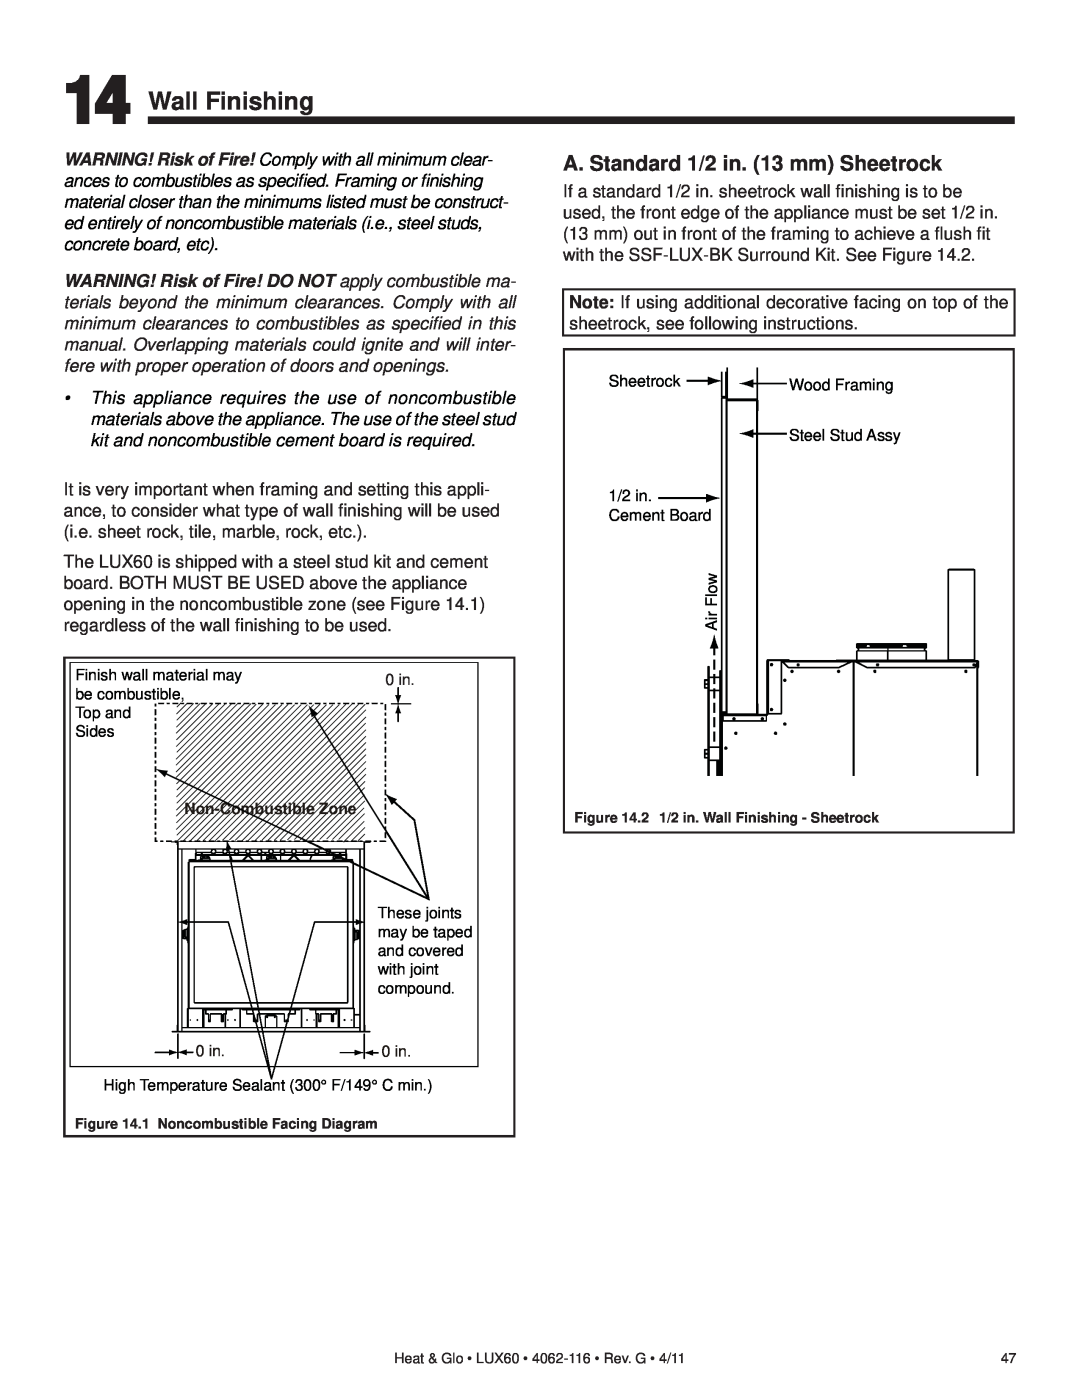 Heat & Glo LifeStyle LUX60 owner manual Wall Finishing, A. Standard 1/2 in. 13 mm Sheetrock 